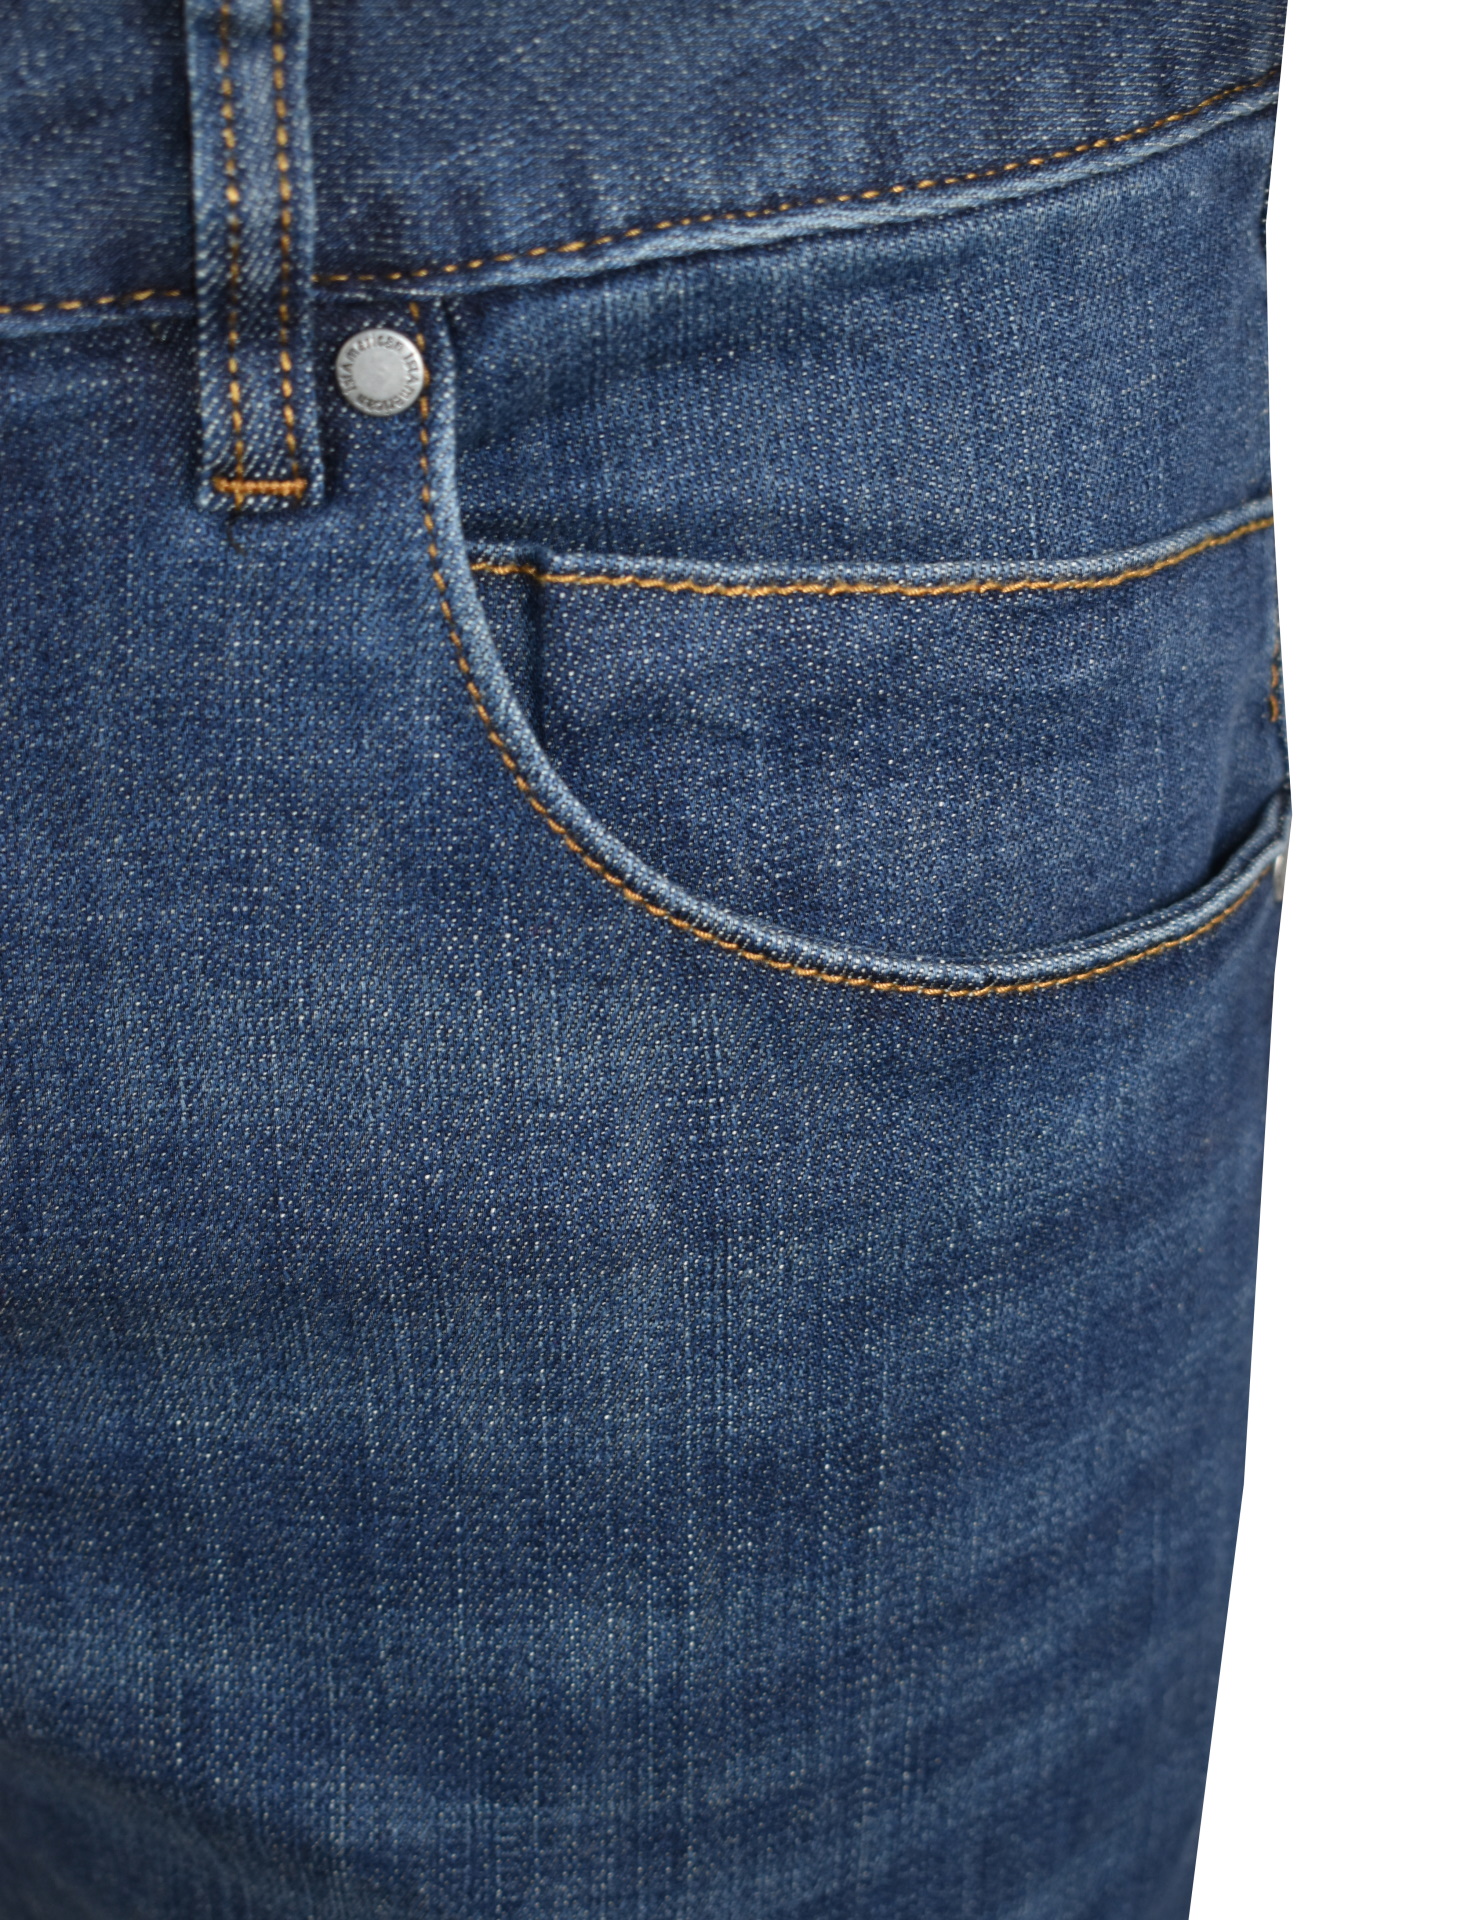 SAM JEANS UOMO 5 TASCHE BLU DENIM 2 1st american jeans fashion uomo 5 tasche colore blu medio denim - 99% cotton 1% elastan denim 1150 oz